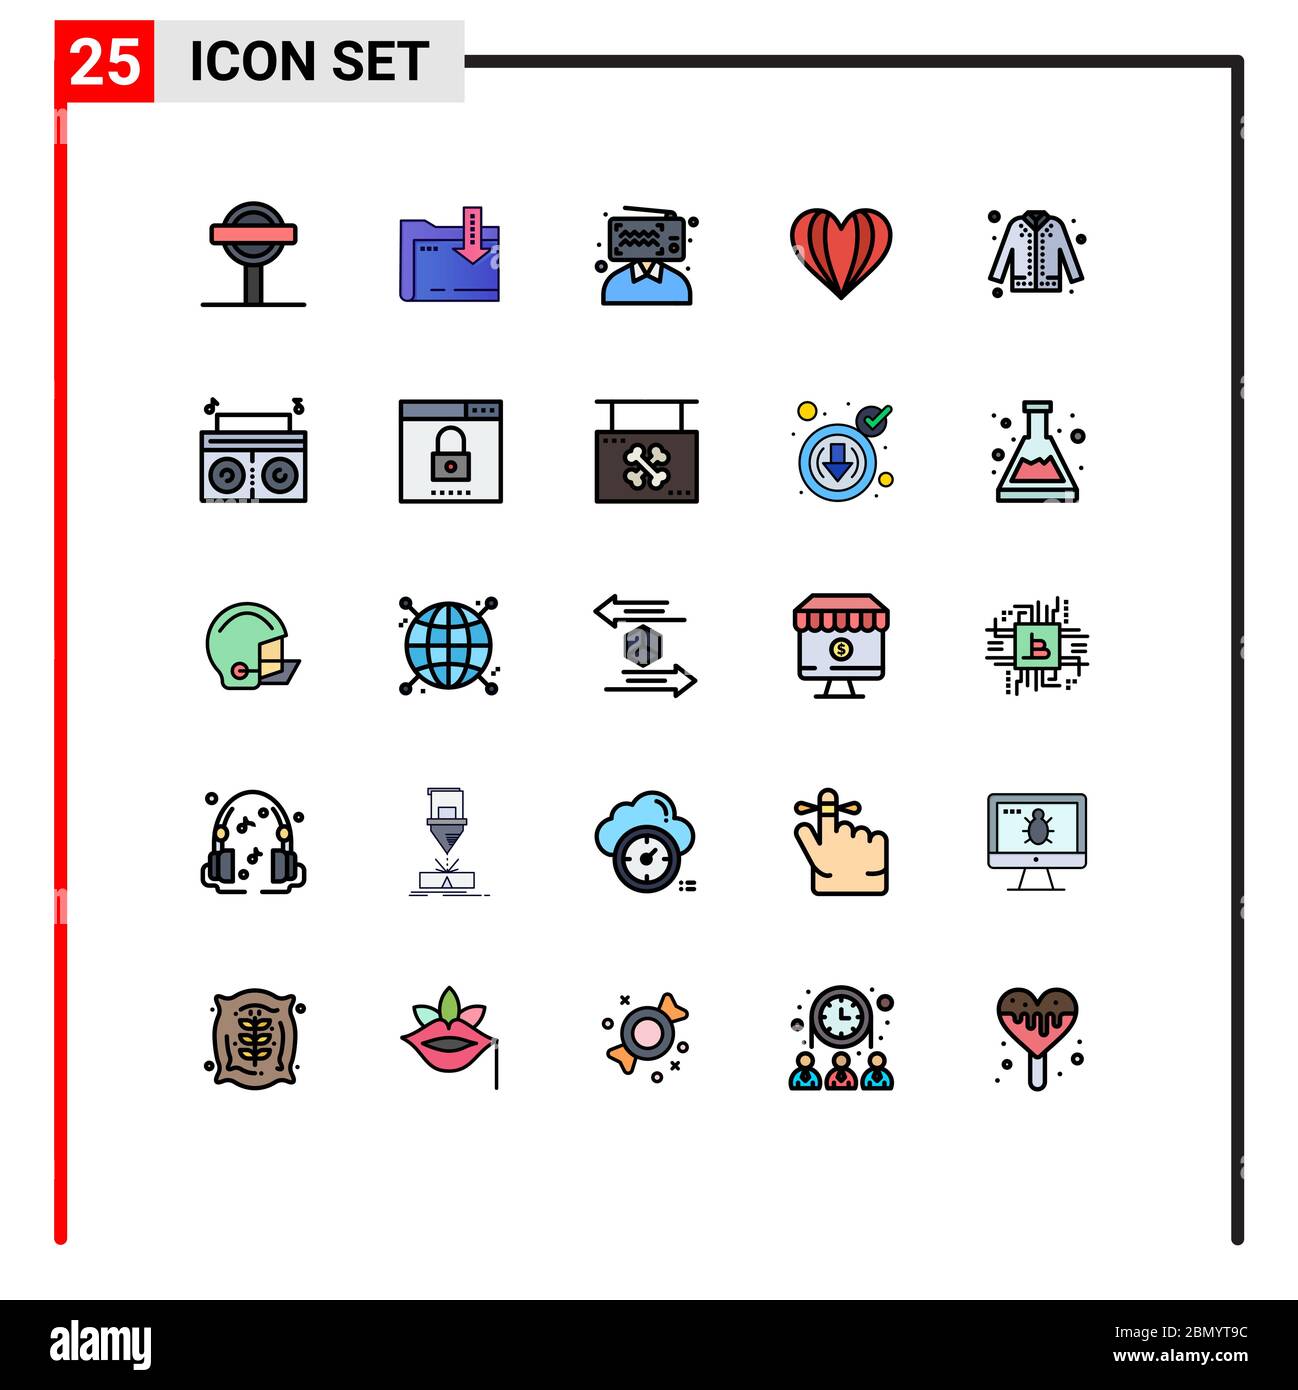 Set of 25 Modern UI Icons Symbols Signs for coat, like, blogger, love, umbrella Editable Vector Design Elements Stock Vector